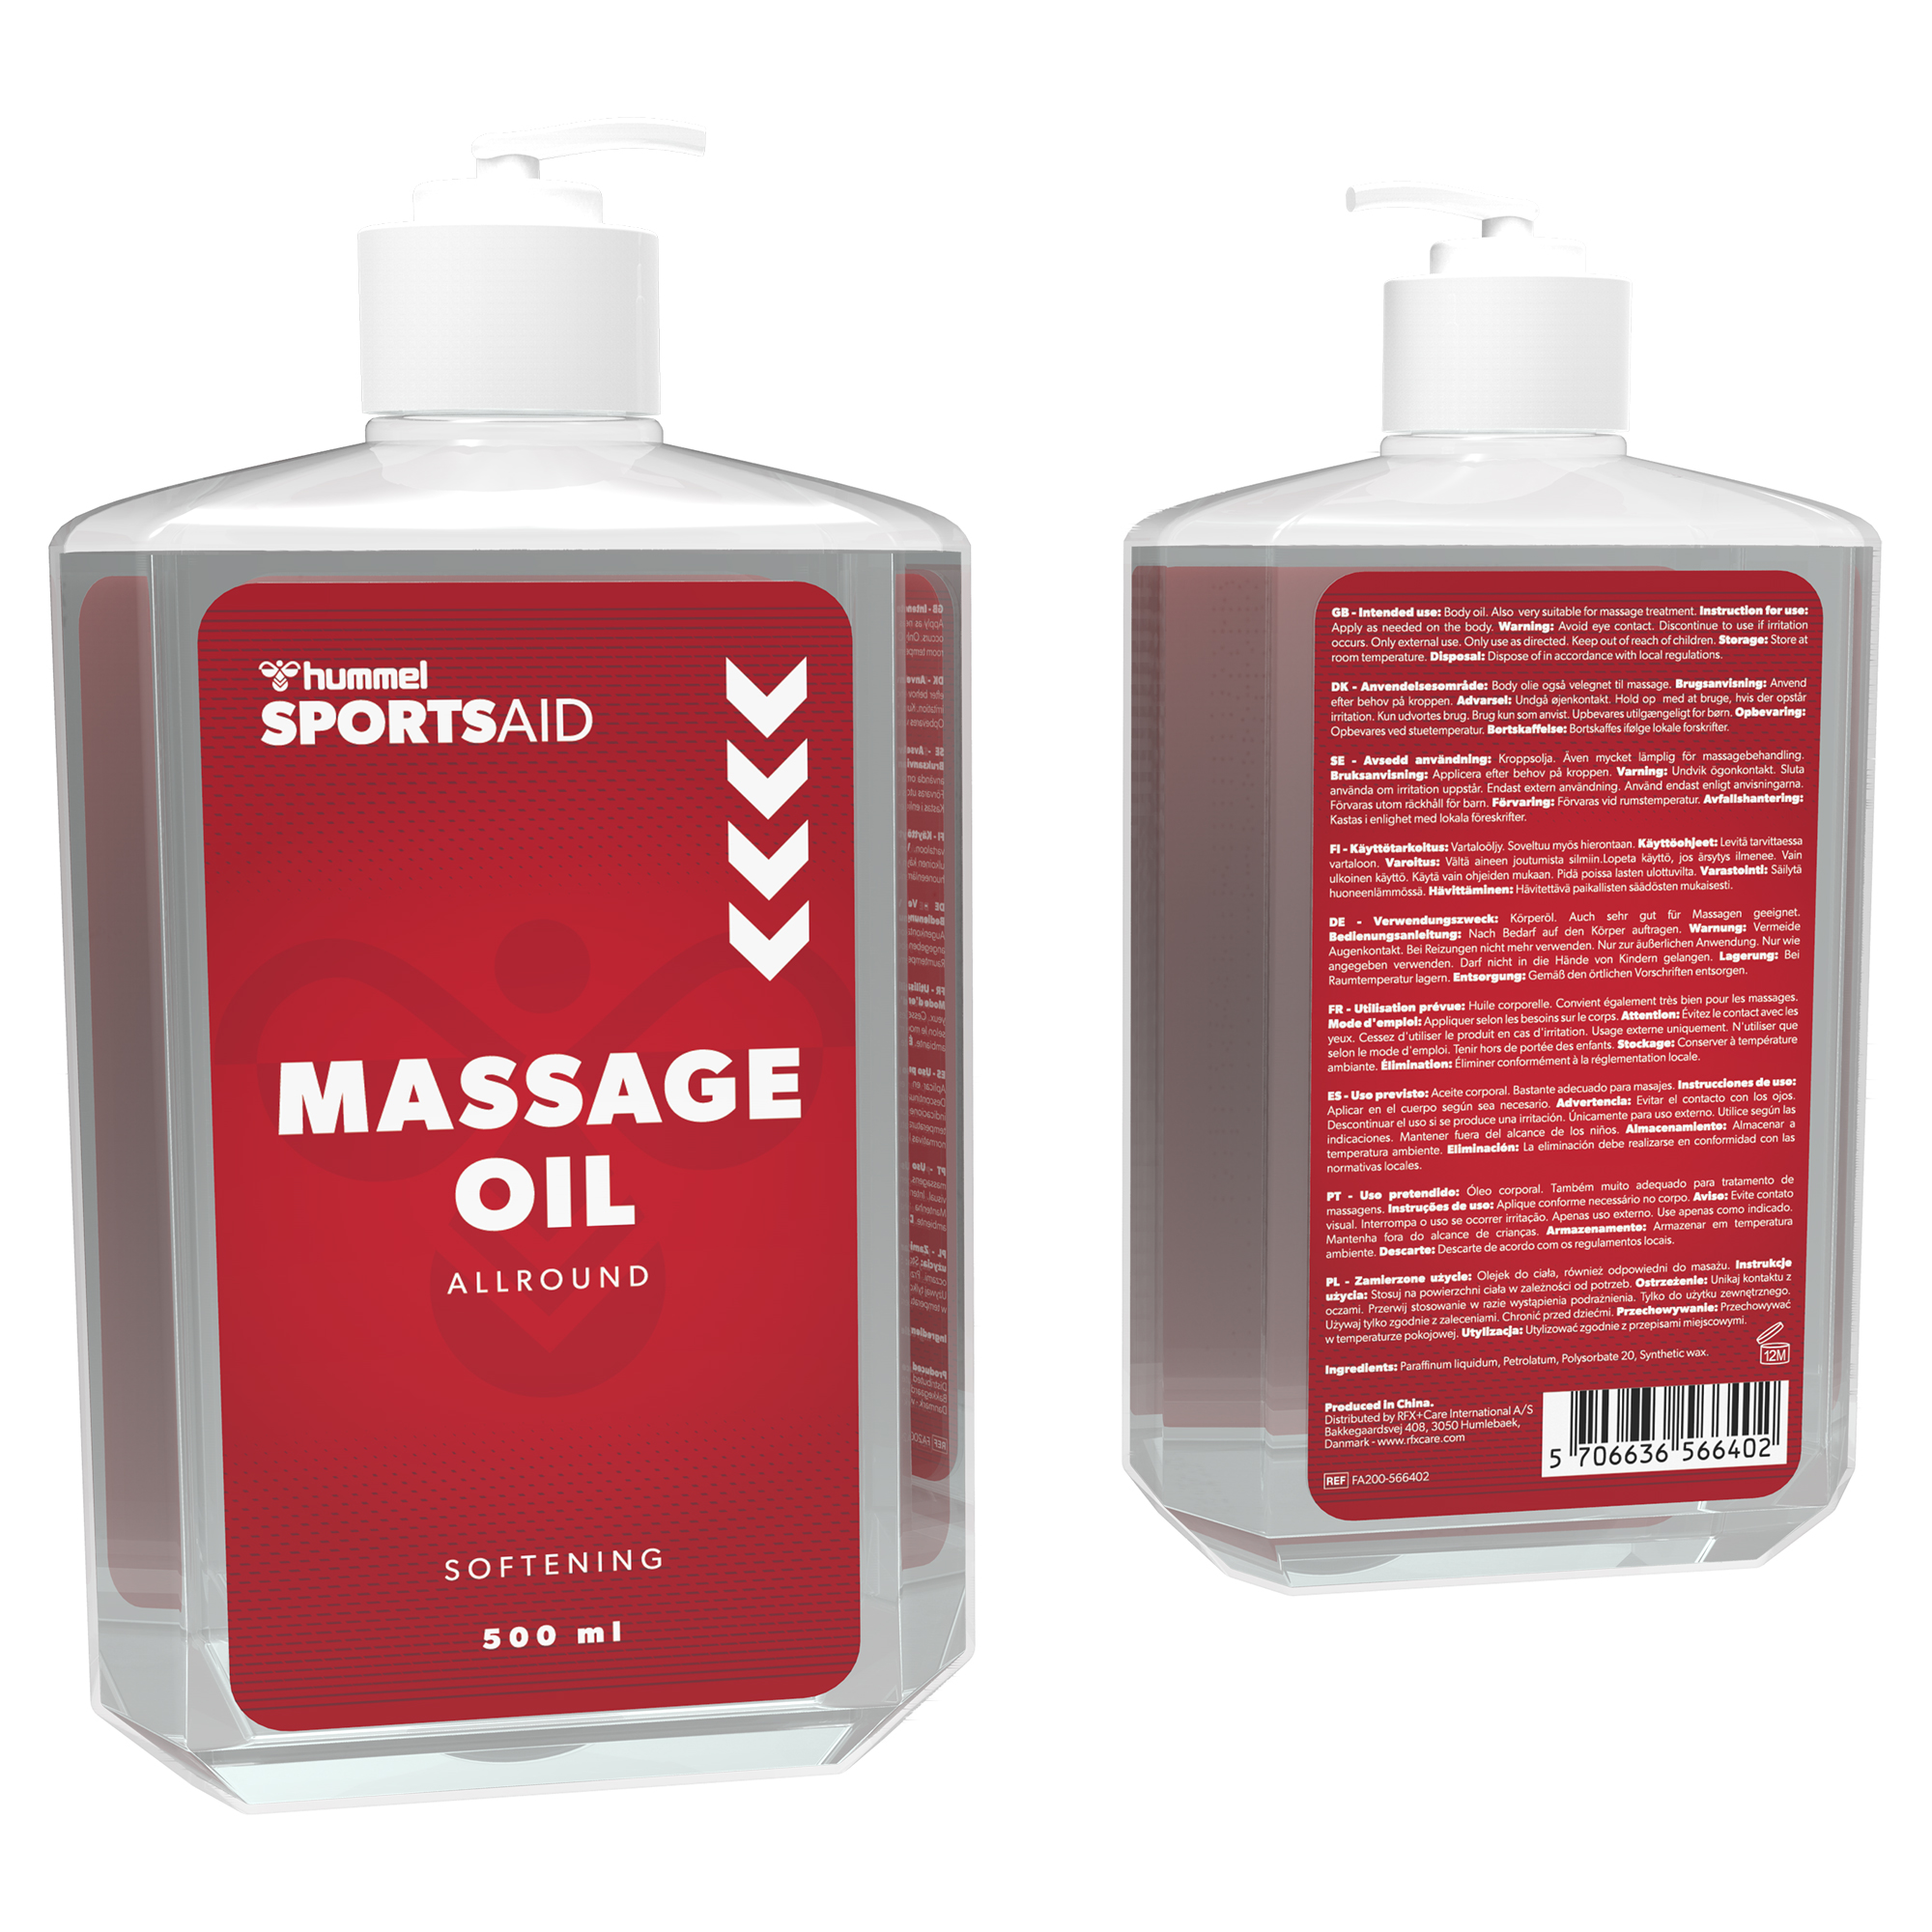 Sportsaid Massage Oil